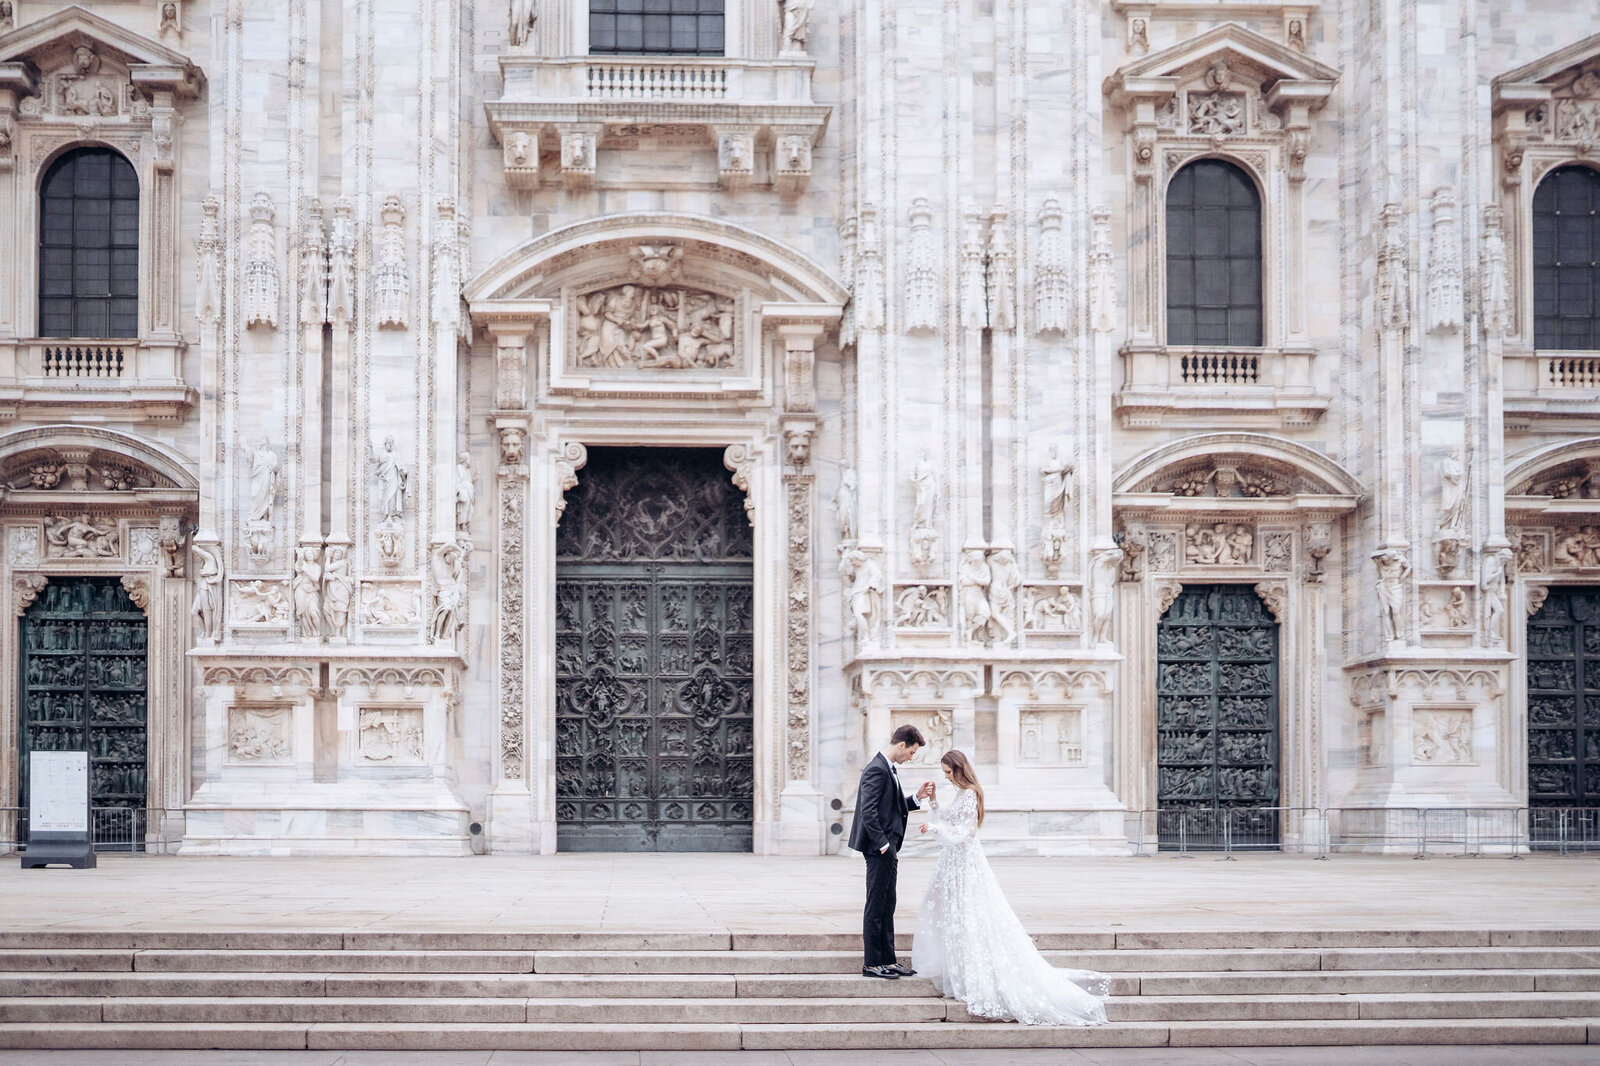 049-Milan-Duomo-Inspiration-Love-Story Elopement-Cinematic-Romance-Destination-Wedding-Editorial-Luxury-Fine-Art-Lisa-Vigliotta-Photography